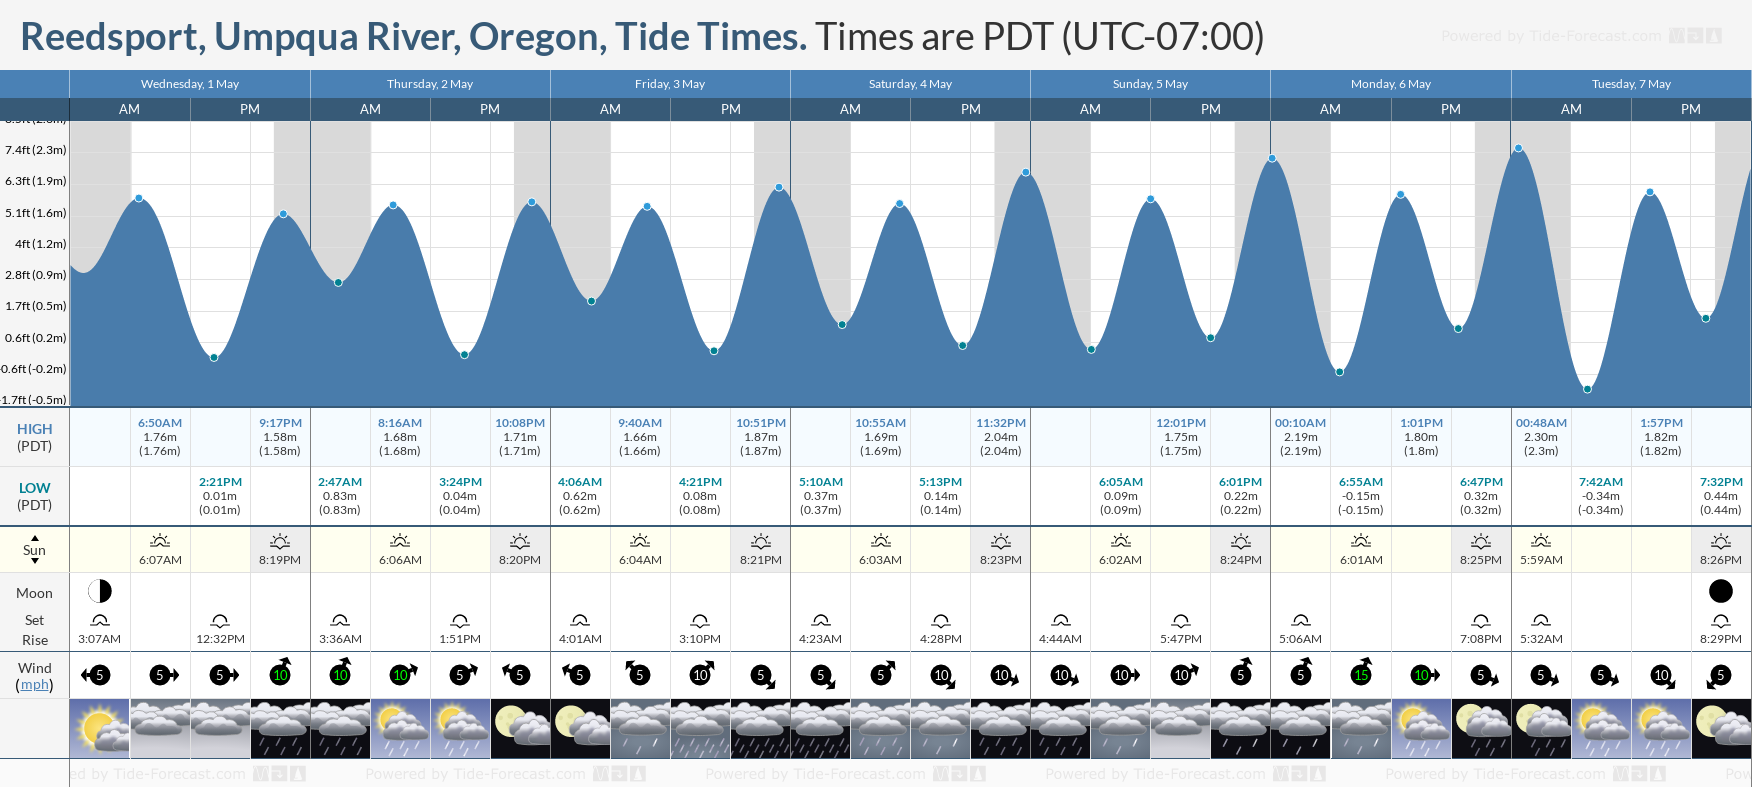 Reedsport, Umpqua River, Oregon Tide Chart including high and low tide times for the next 7 days